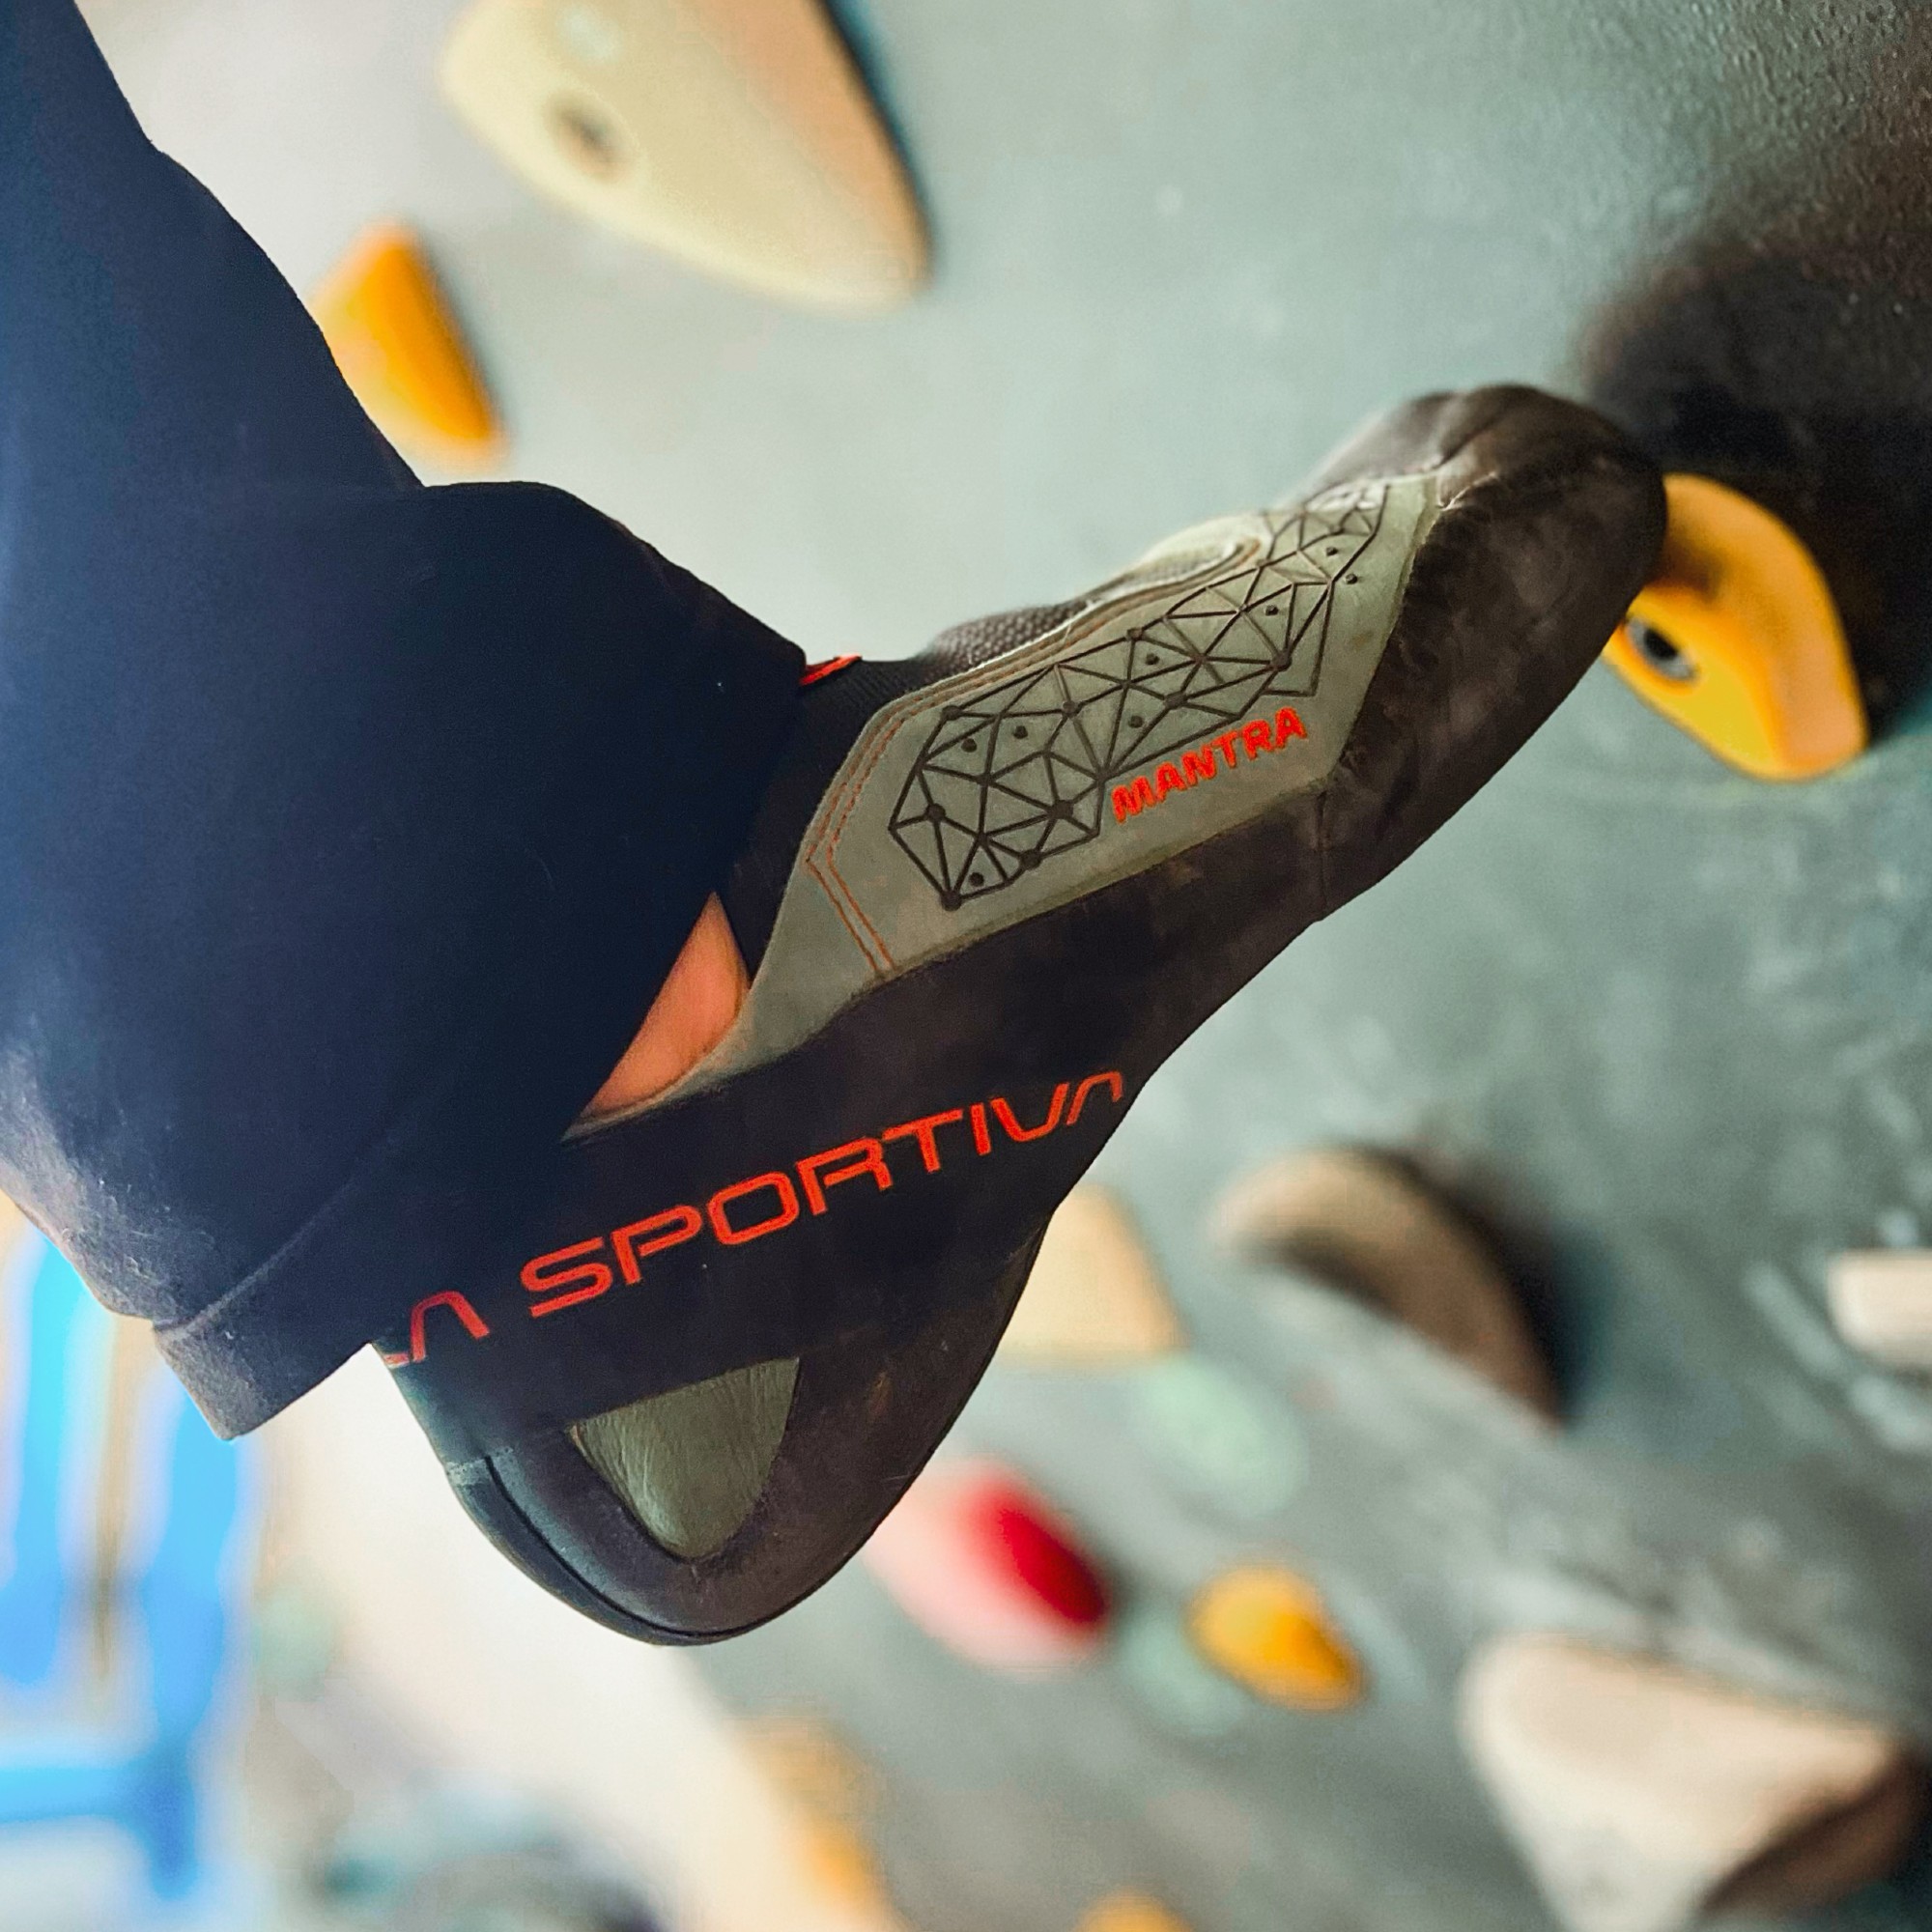 La Sportiva Mantra Technical Performance Climbing Shoe